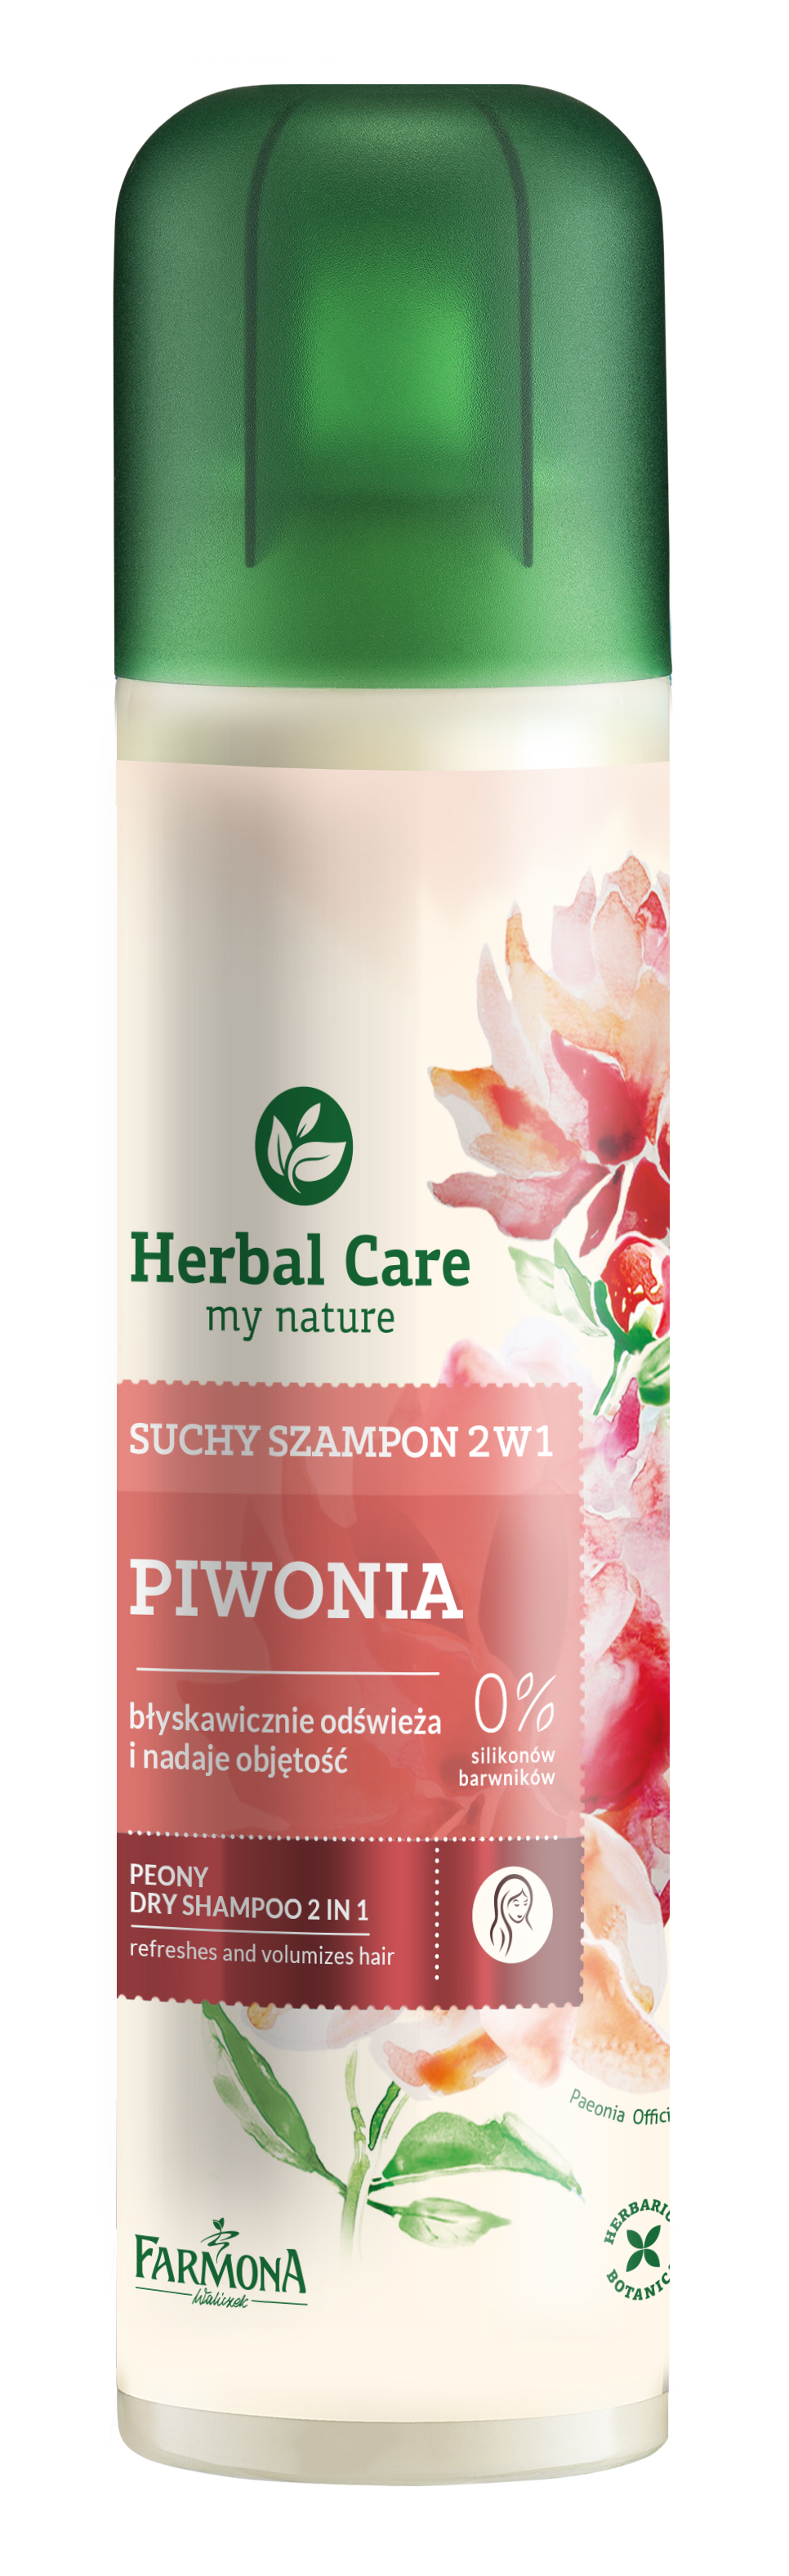 suchy szampon herbal care piwonia